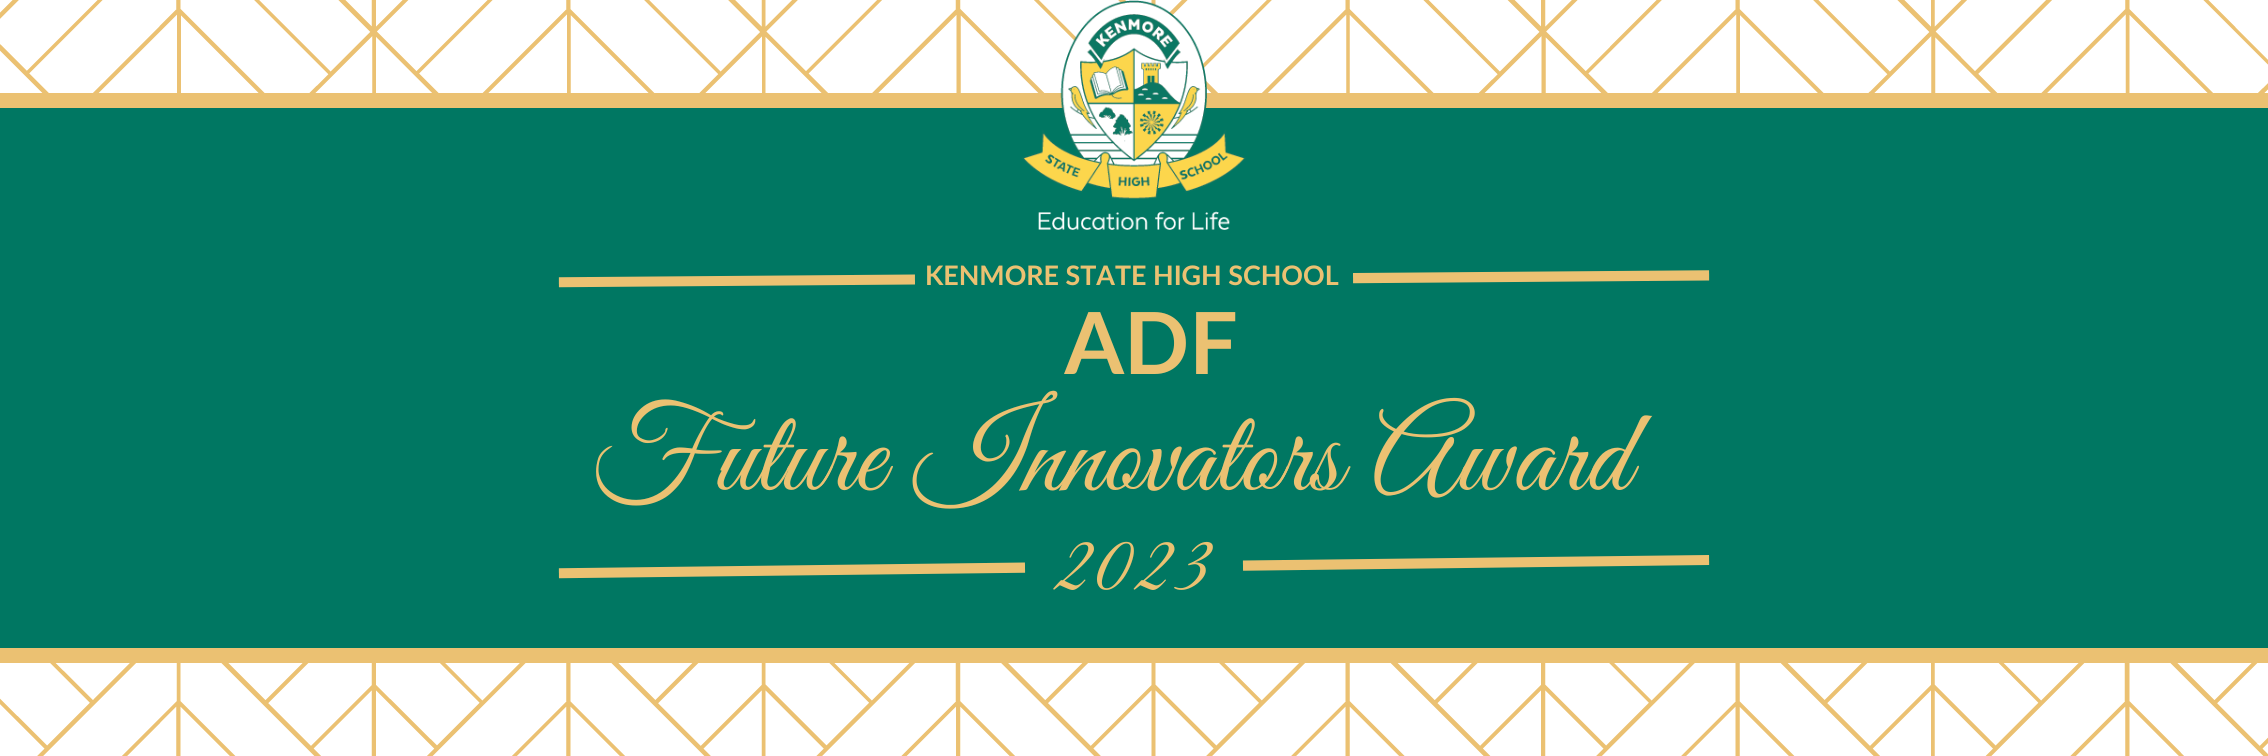 ADF Future Innovators Website Banner.png